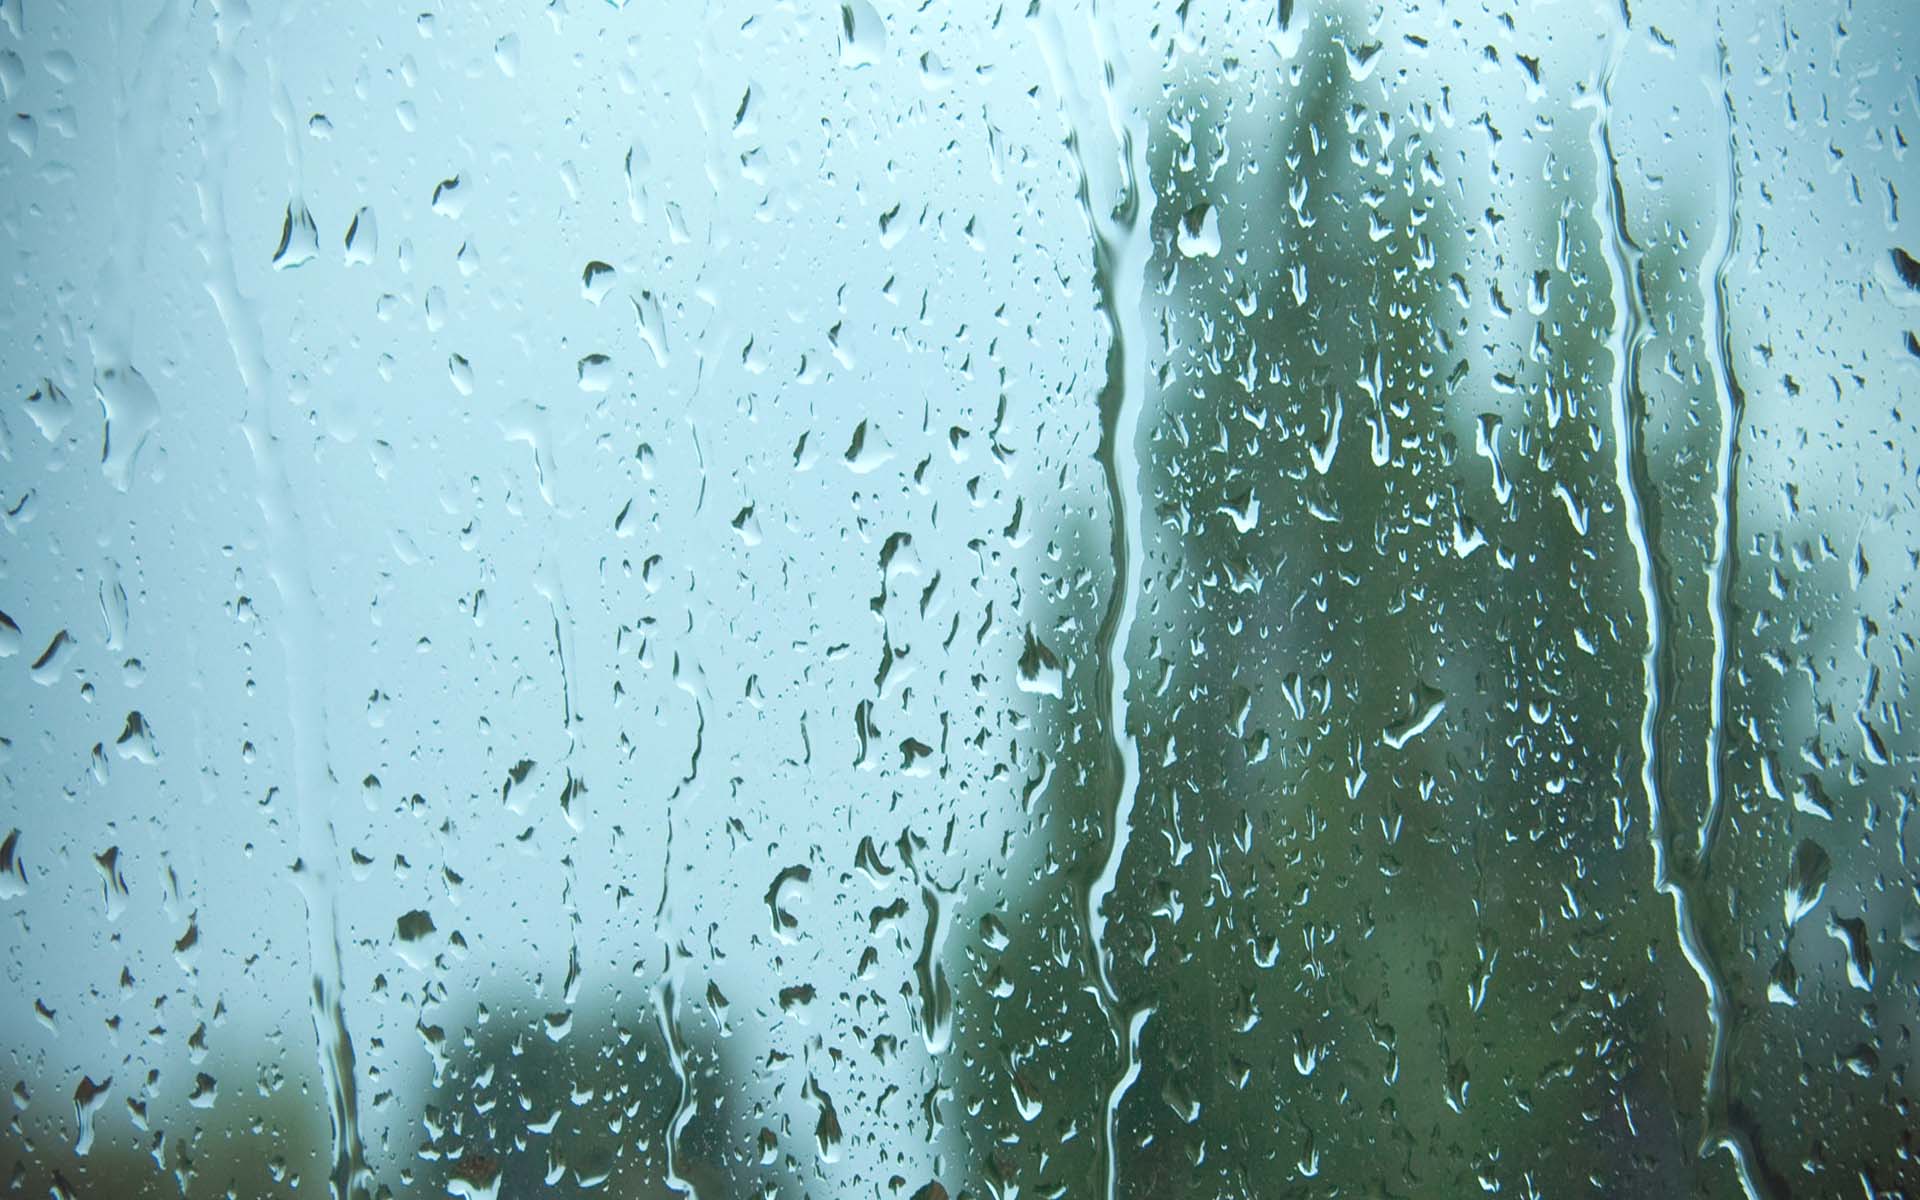 rain drops on window Quotes